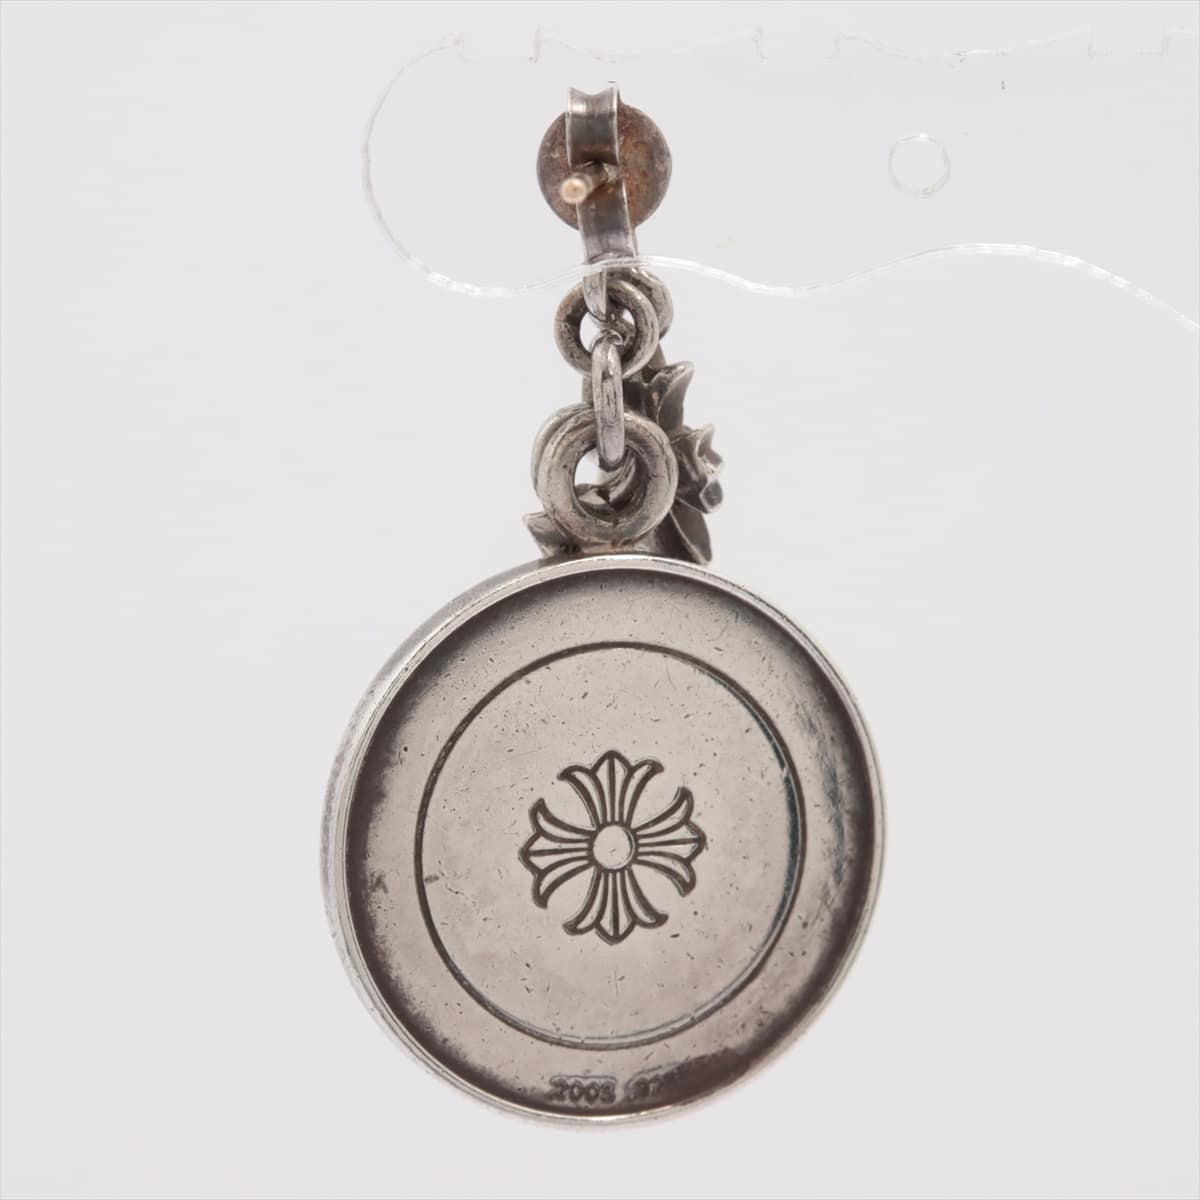 Chrome Hearts Angel Medal Charm Piercing jewelry 925 7.9g w/ BABY FAT & TINY ECH PLUS